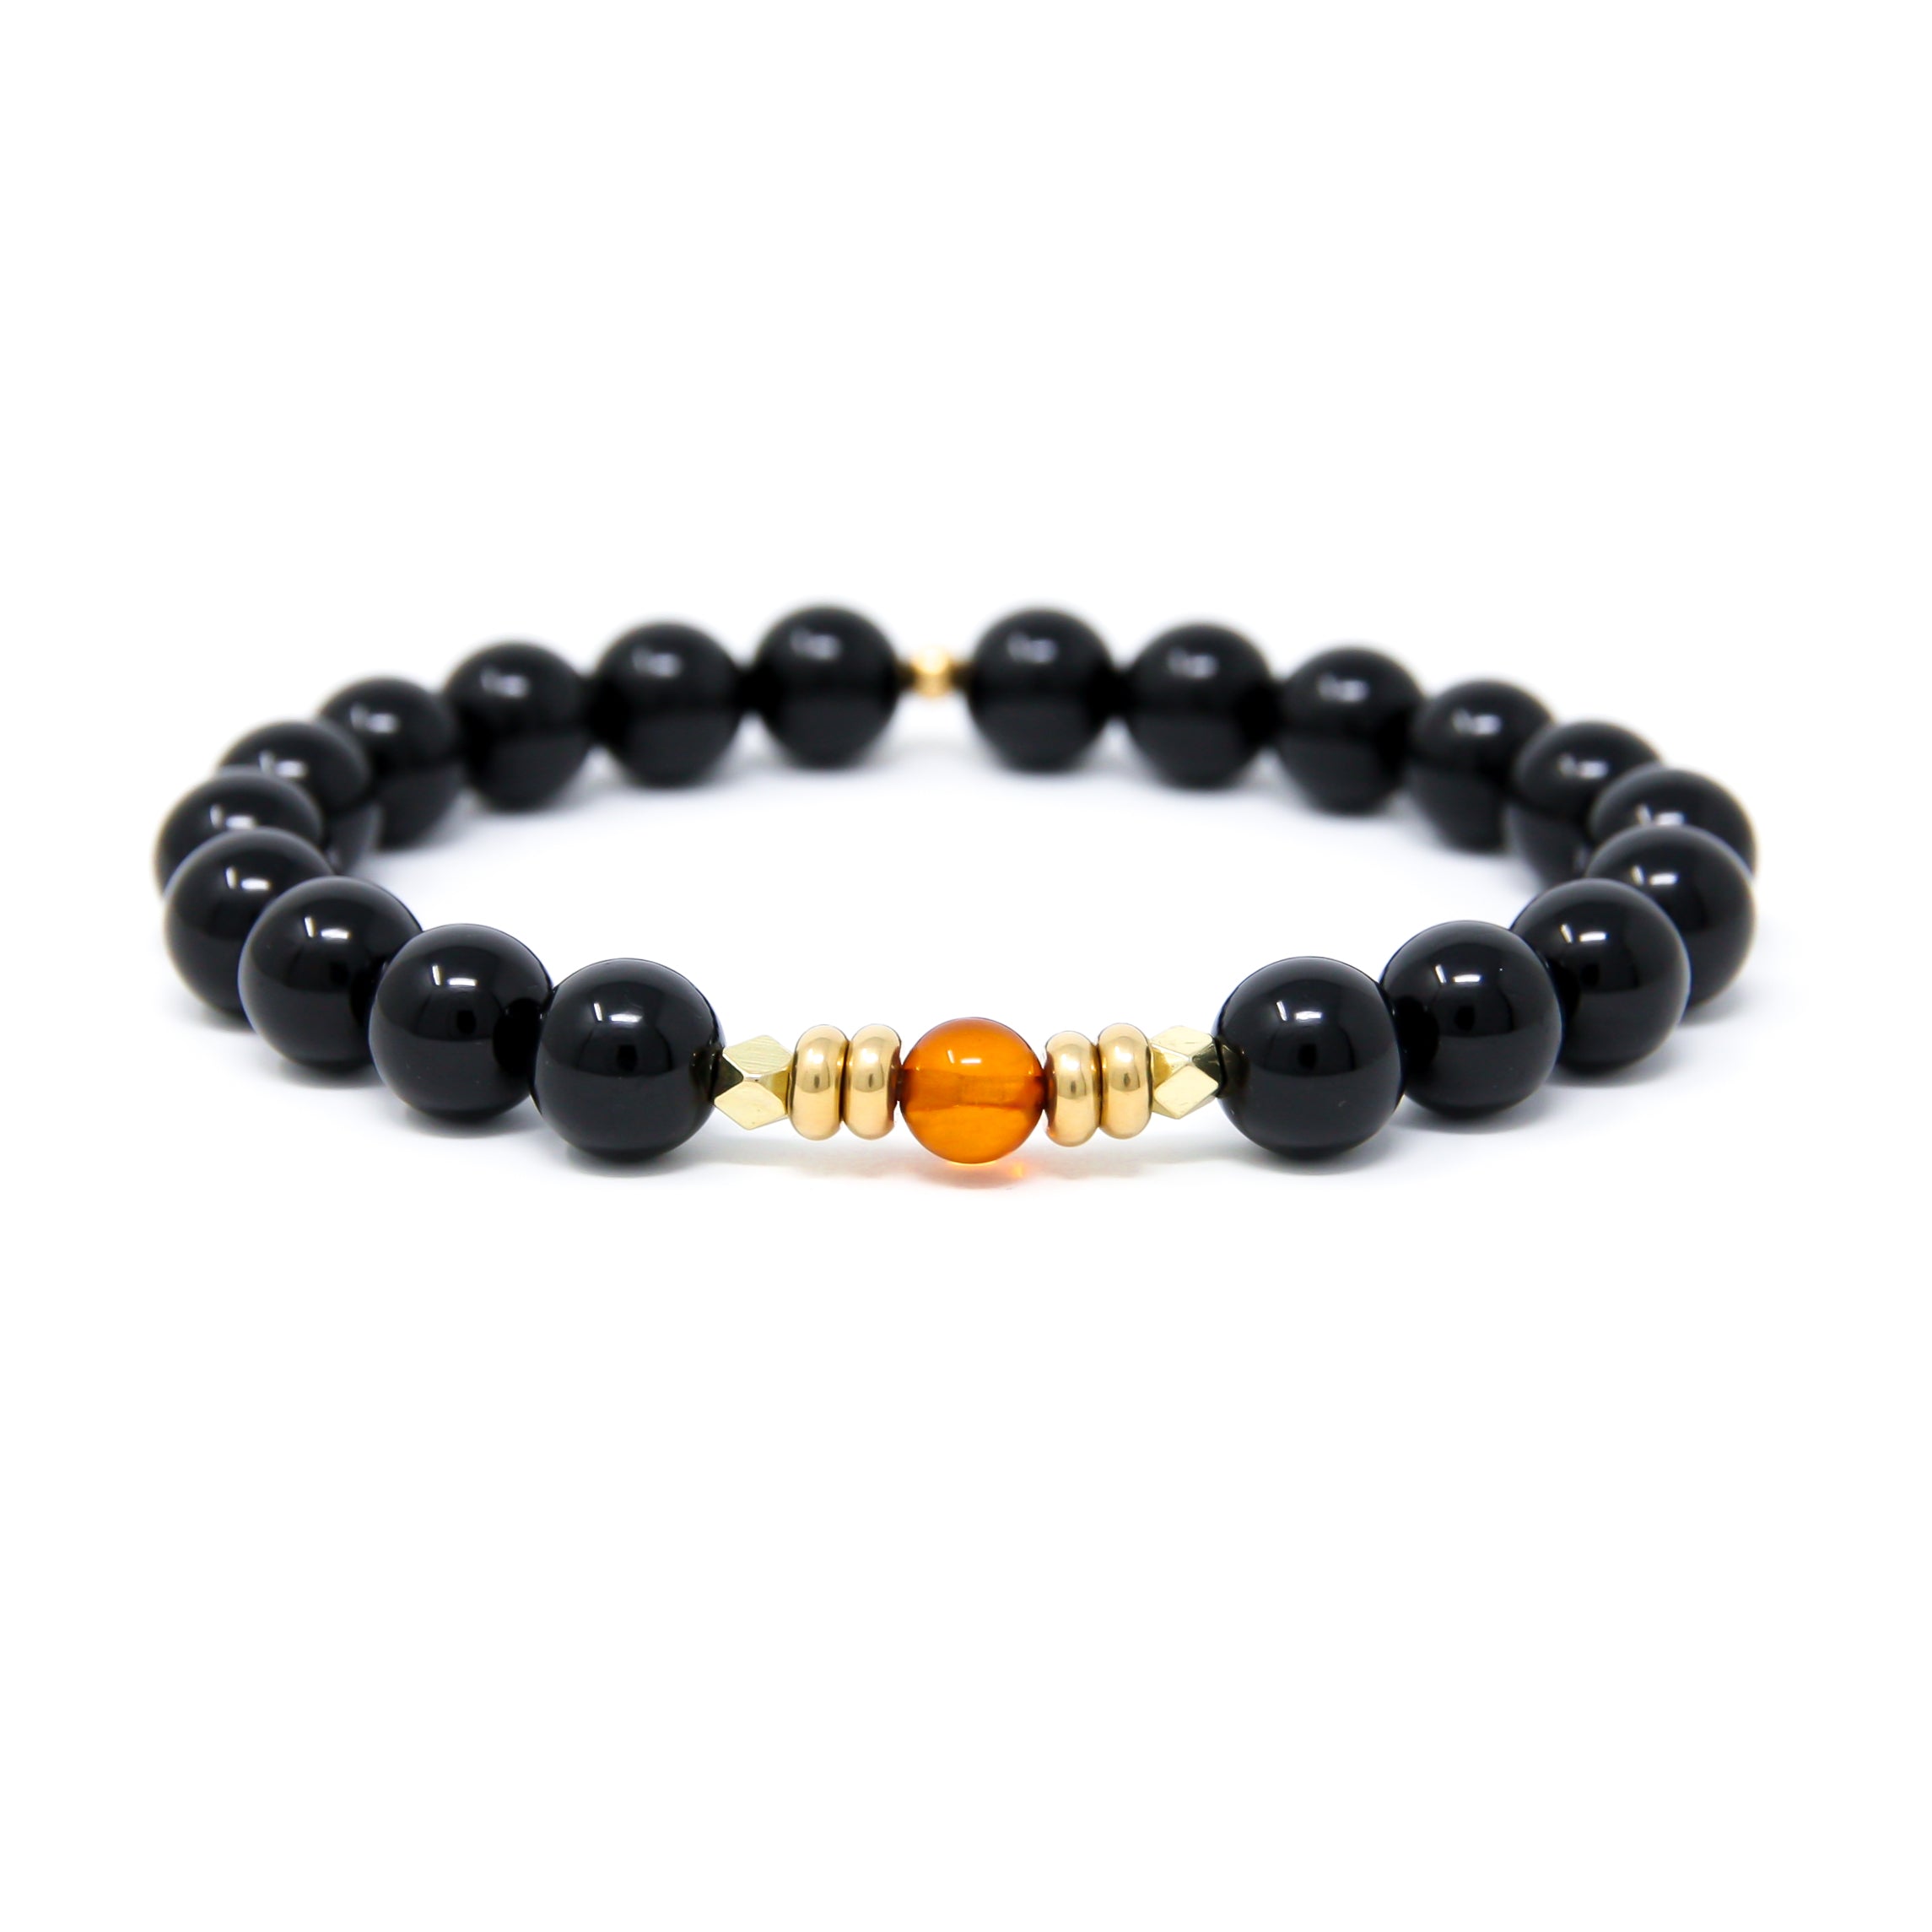 Black Tourmaline prayer bead bracelet, modern yoga jewelry